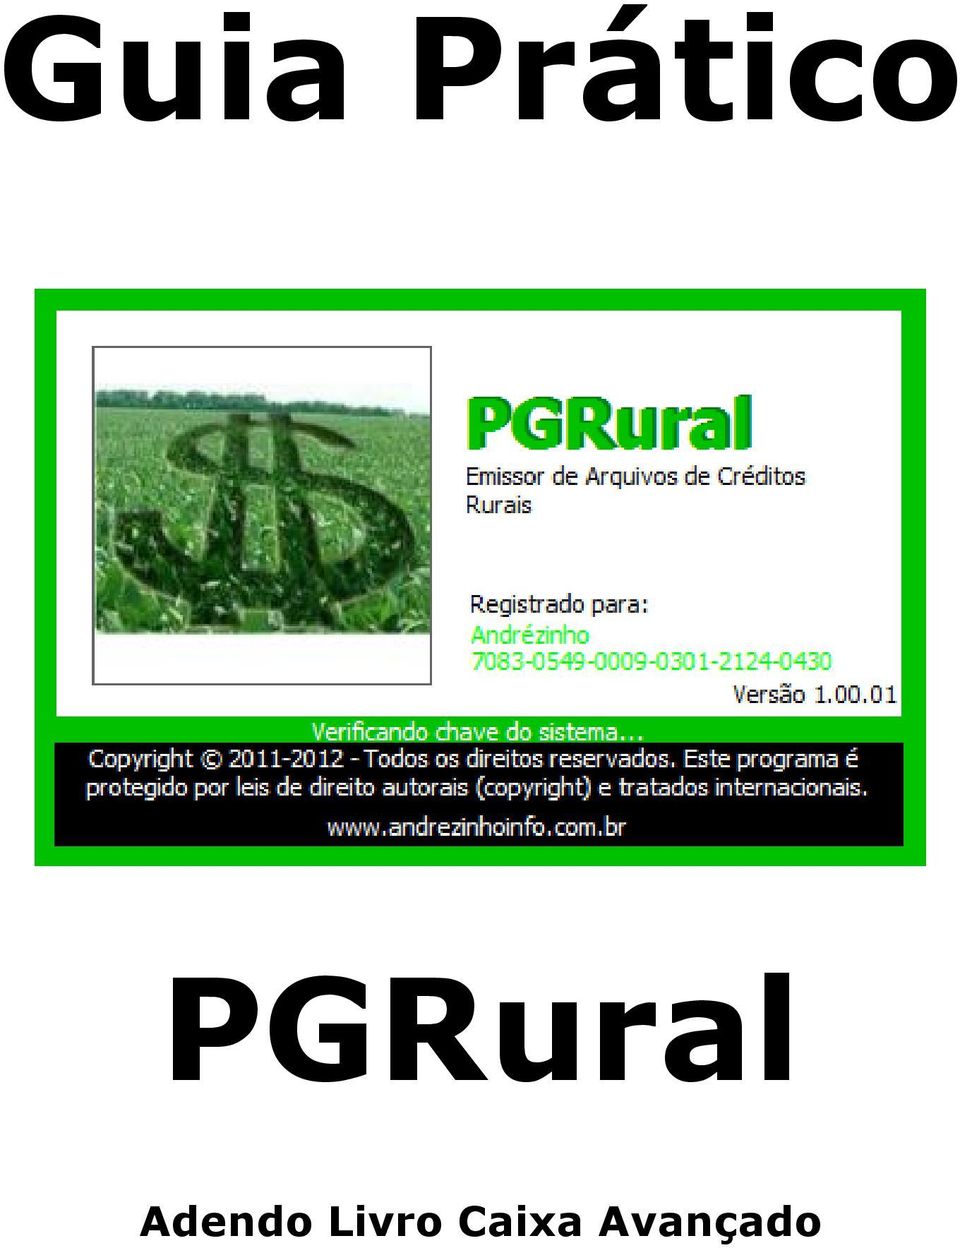 PGRural